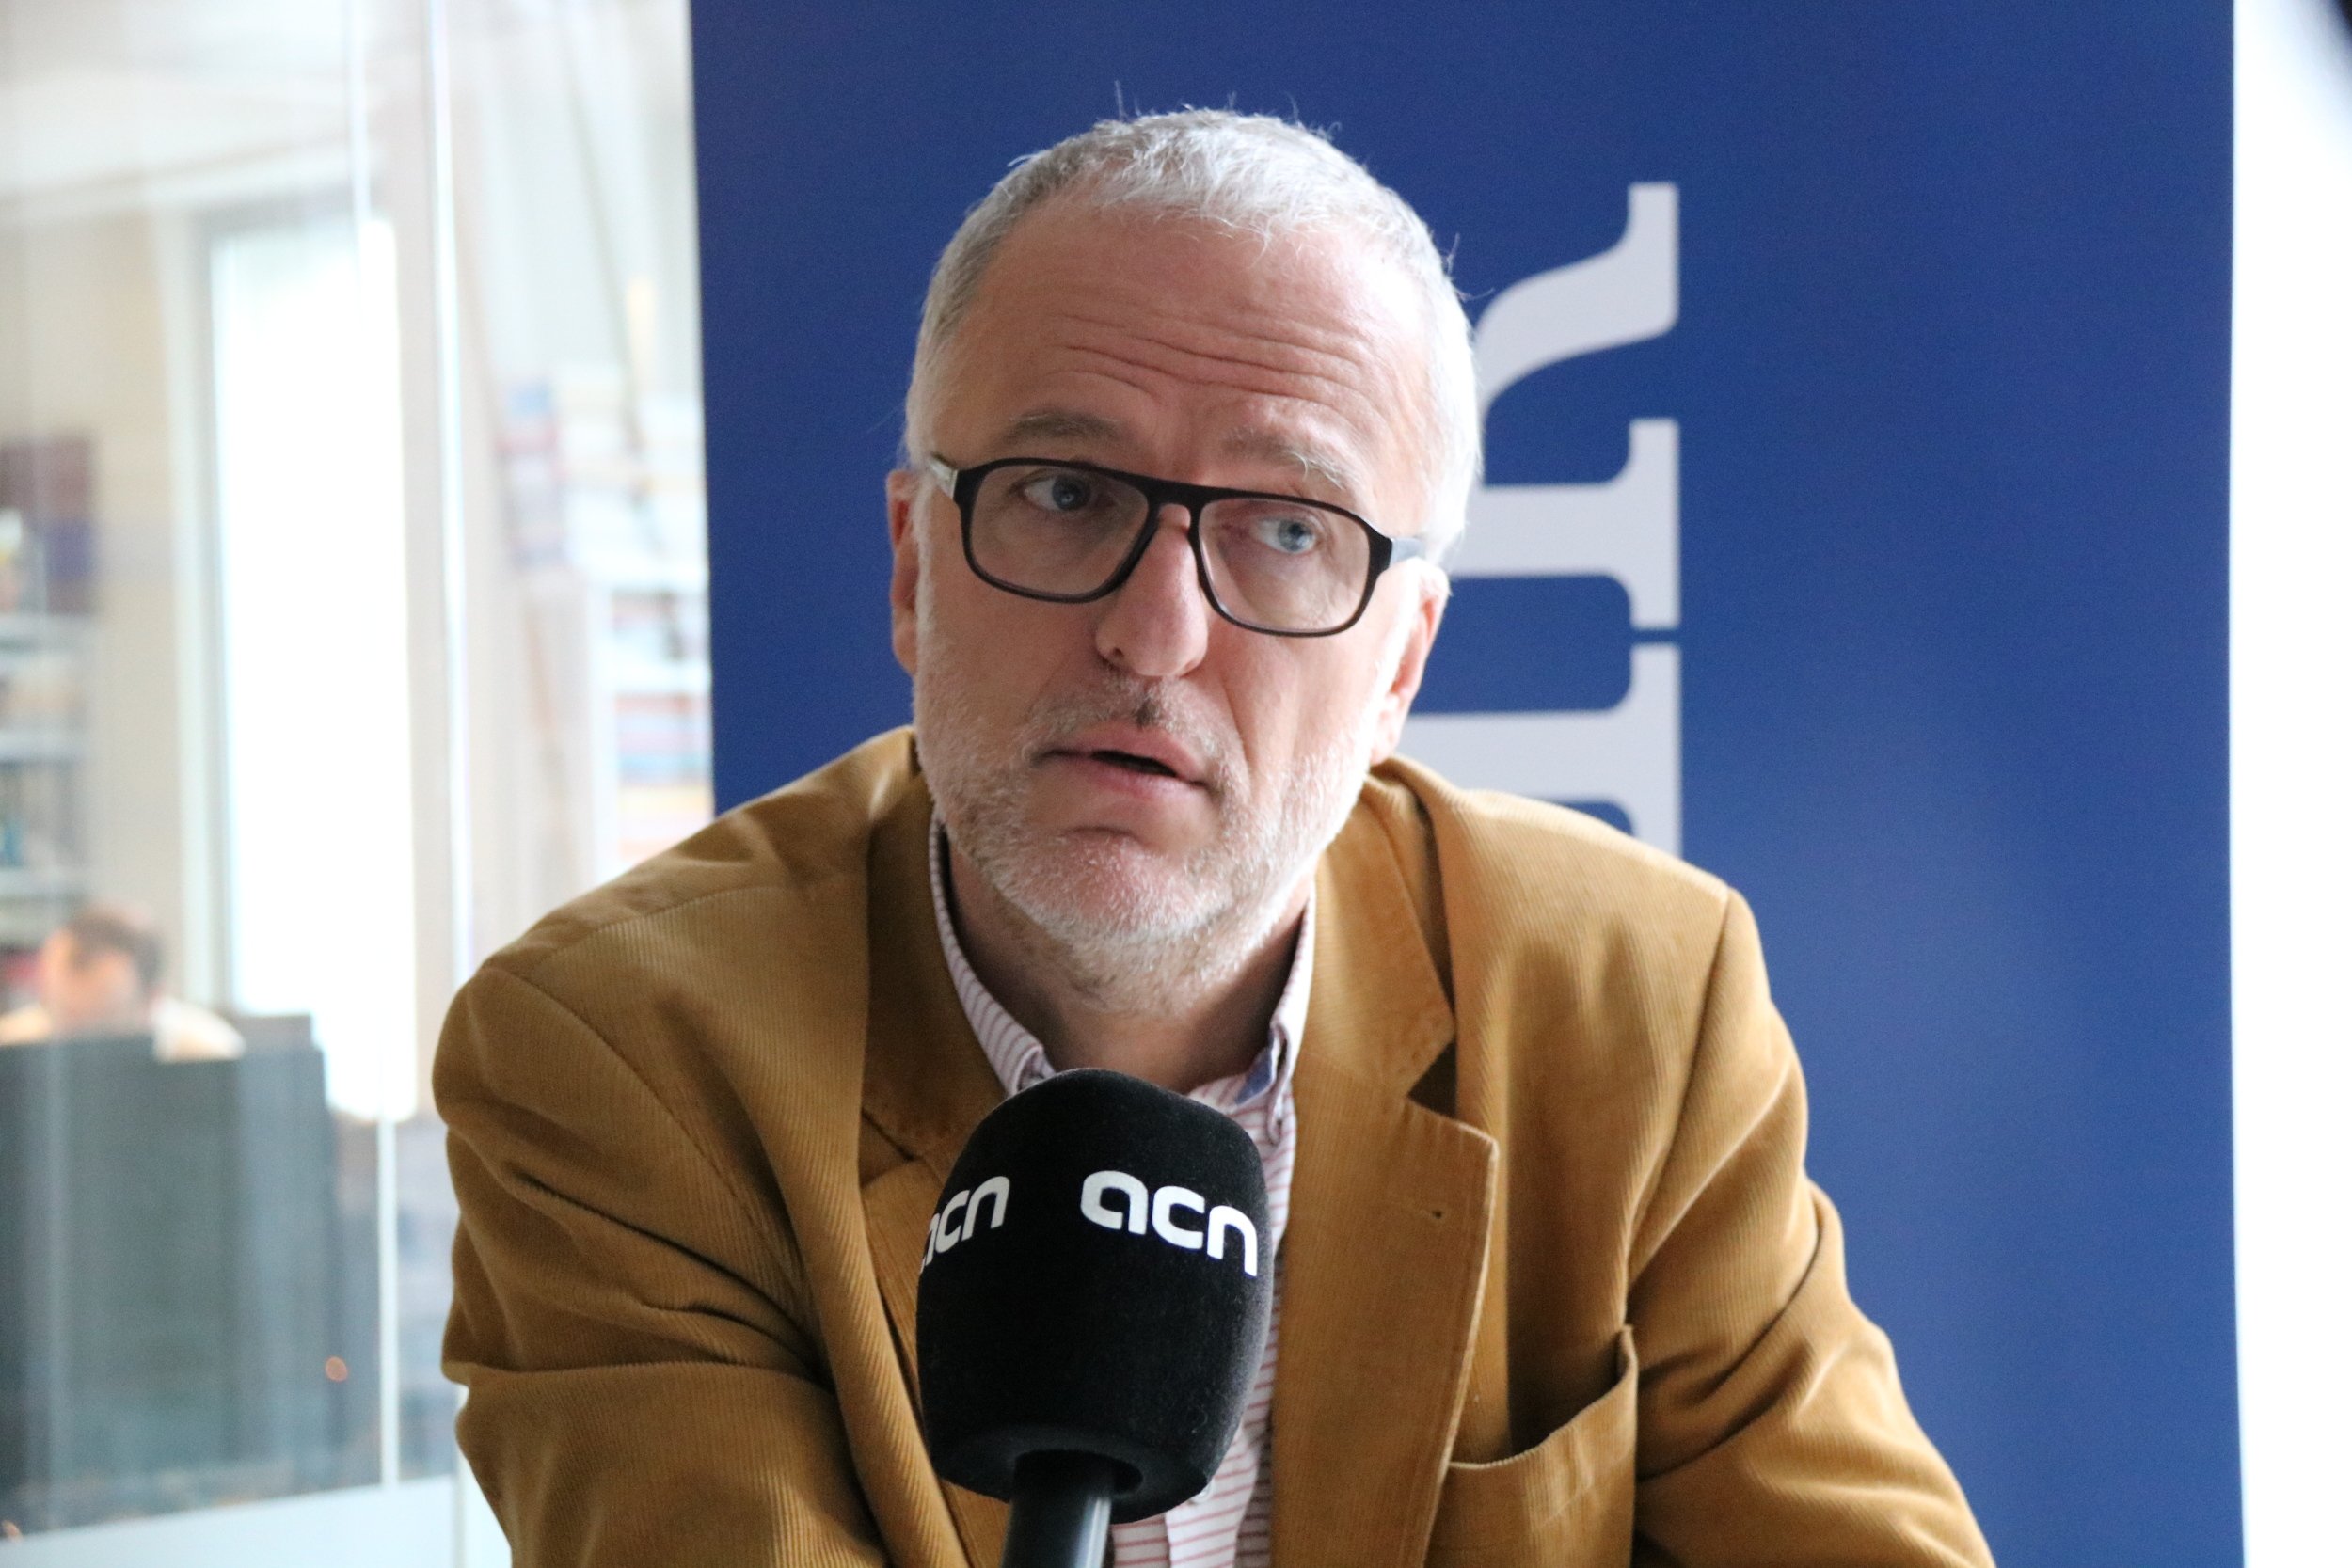 El periodista de 'Le Soir' que entrevistó a Puigdemont vería "increíble" que se le extraditara